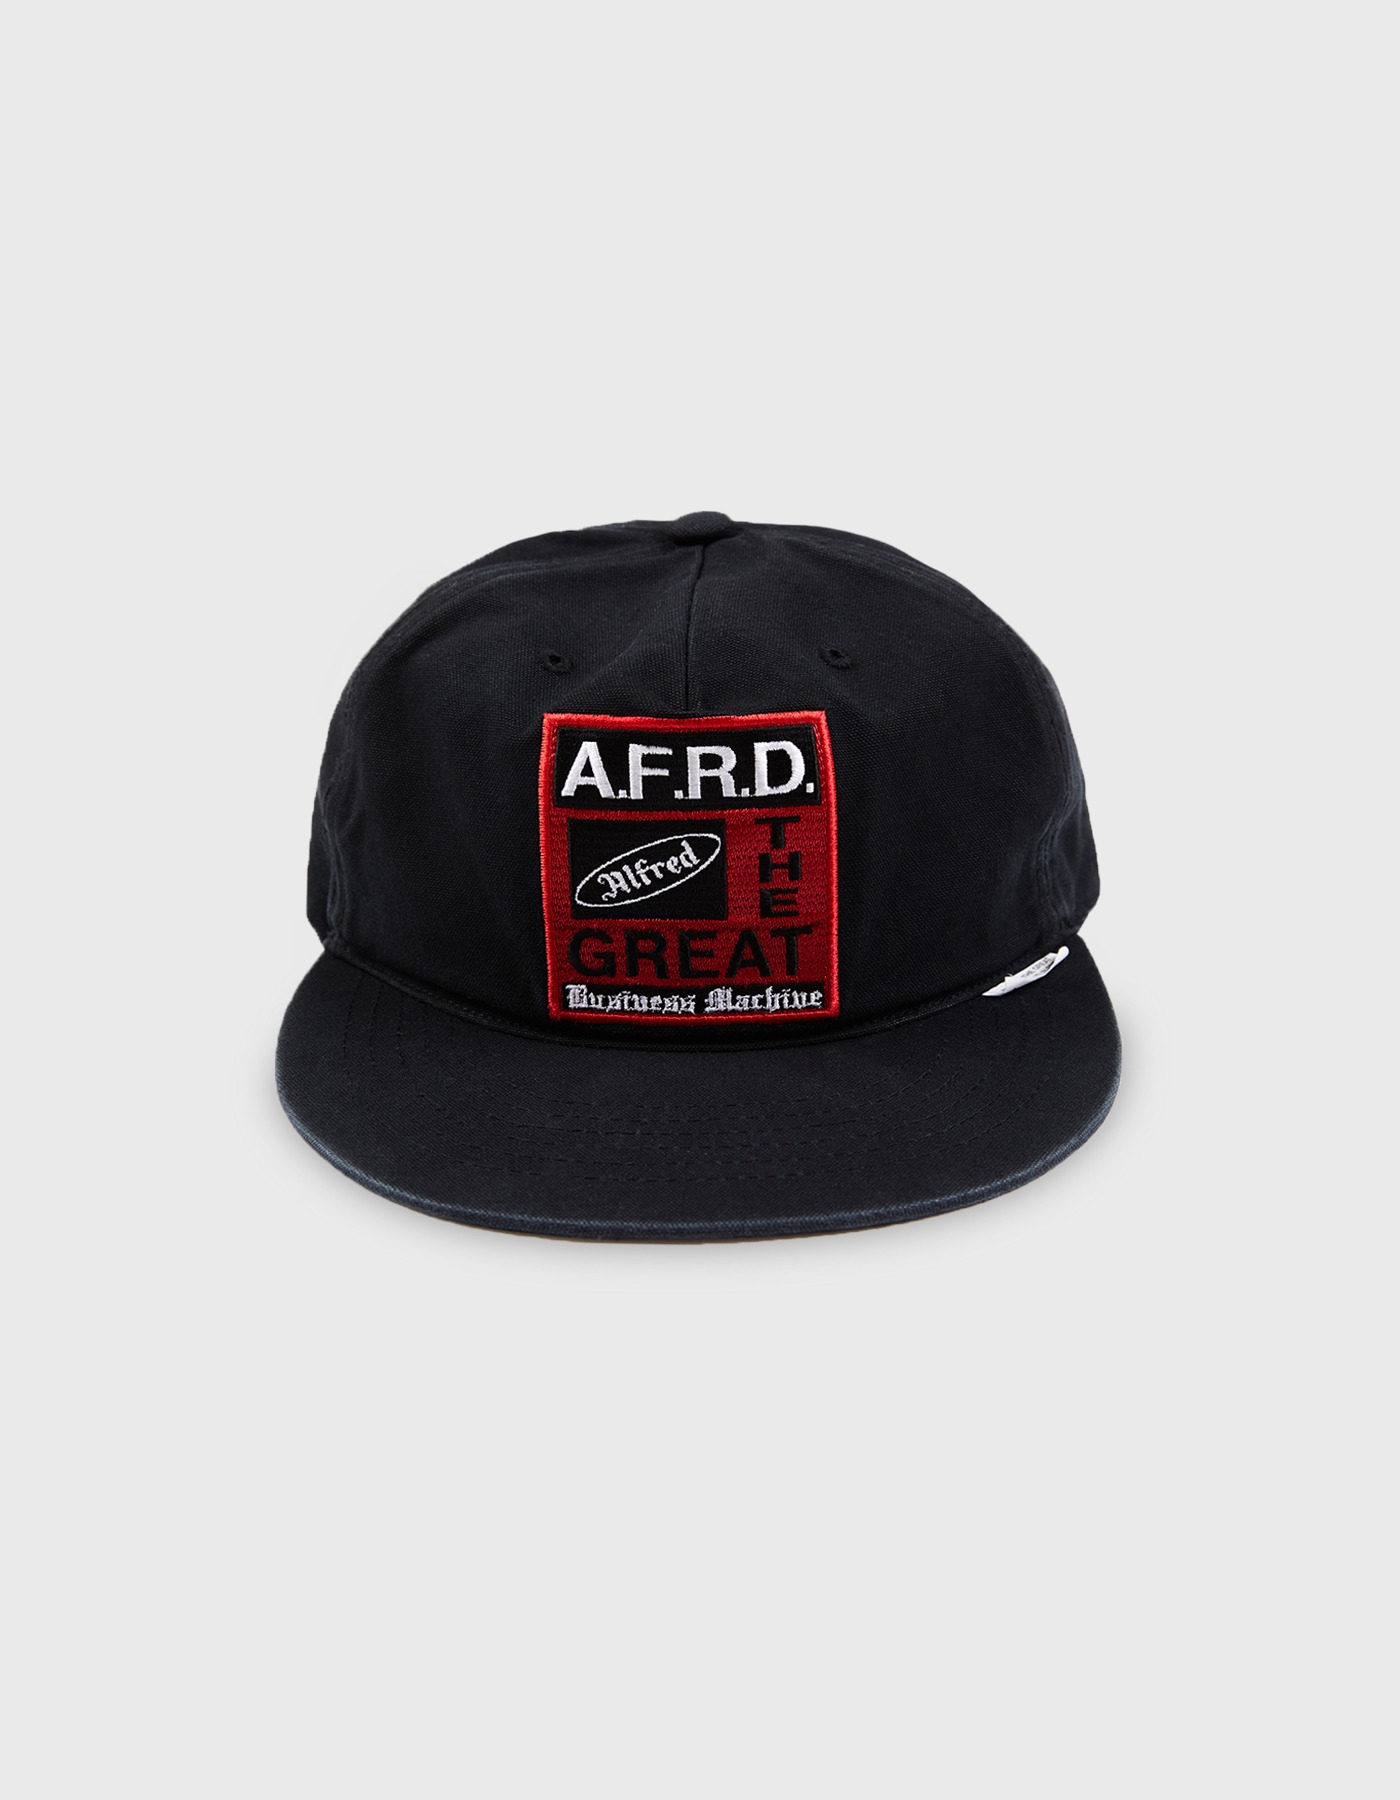 AFRD BUSINESS MACHINE CAP / Black